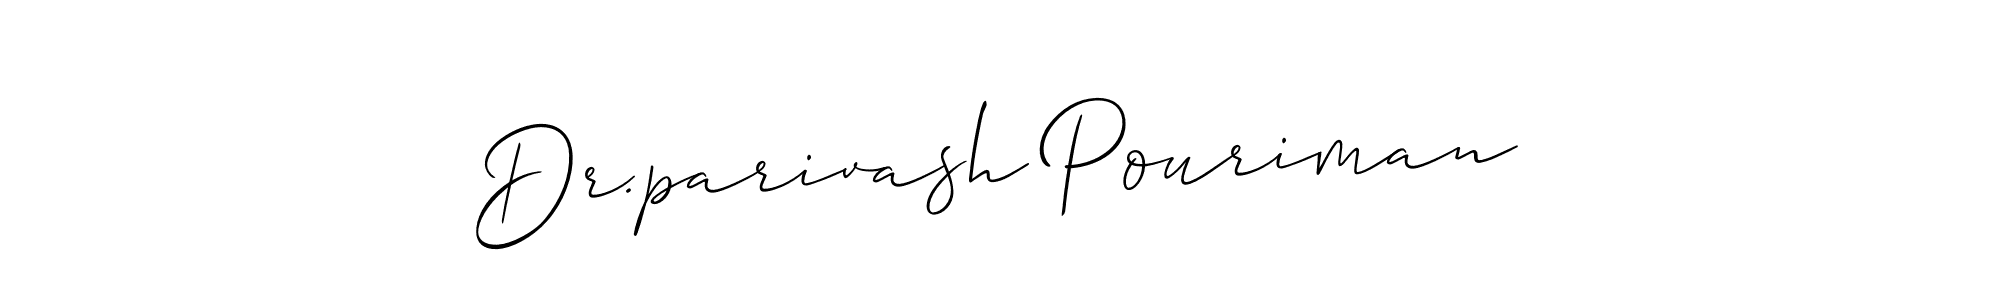 Best and Professional Signature Style for Dr.parivash Pouriman. Allison_Script Best Signature Style Collection. Dr.parivash Pouriman signature style 2 images and pictures png